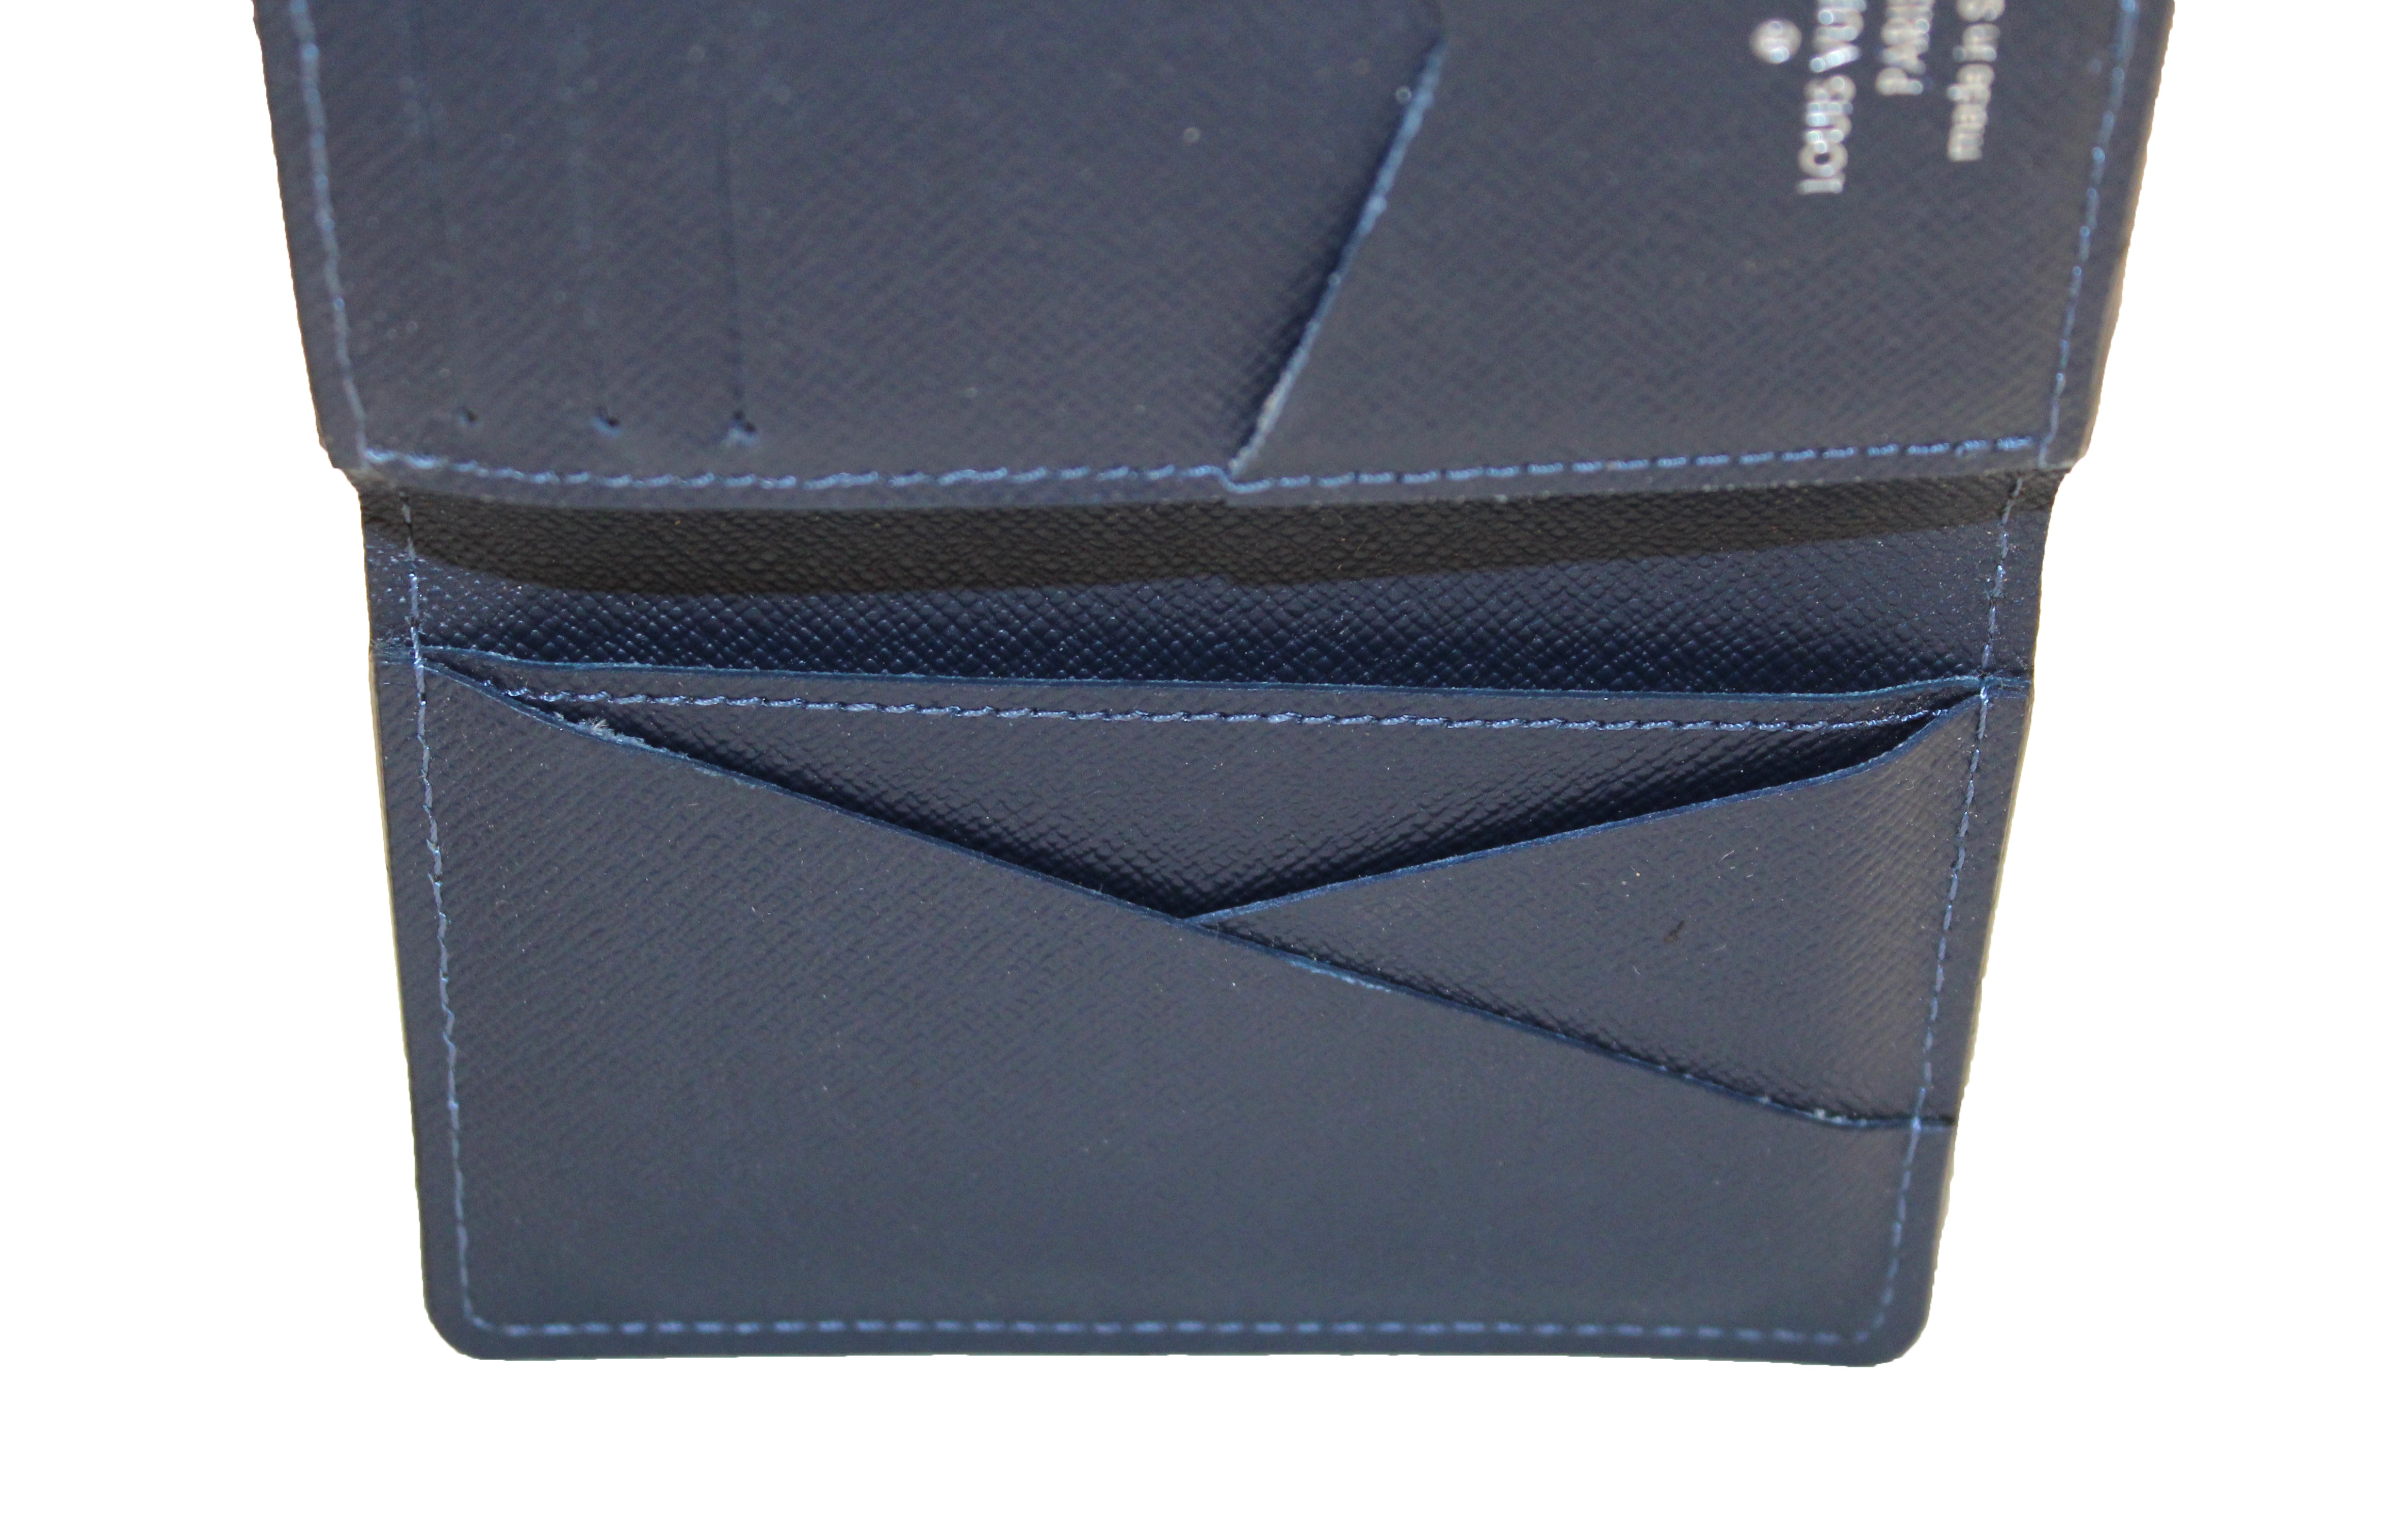 Louis Vuitton Pocket Organizer Wallet - Blue Epi – PROVENANCE